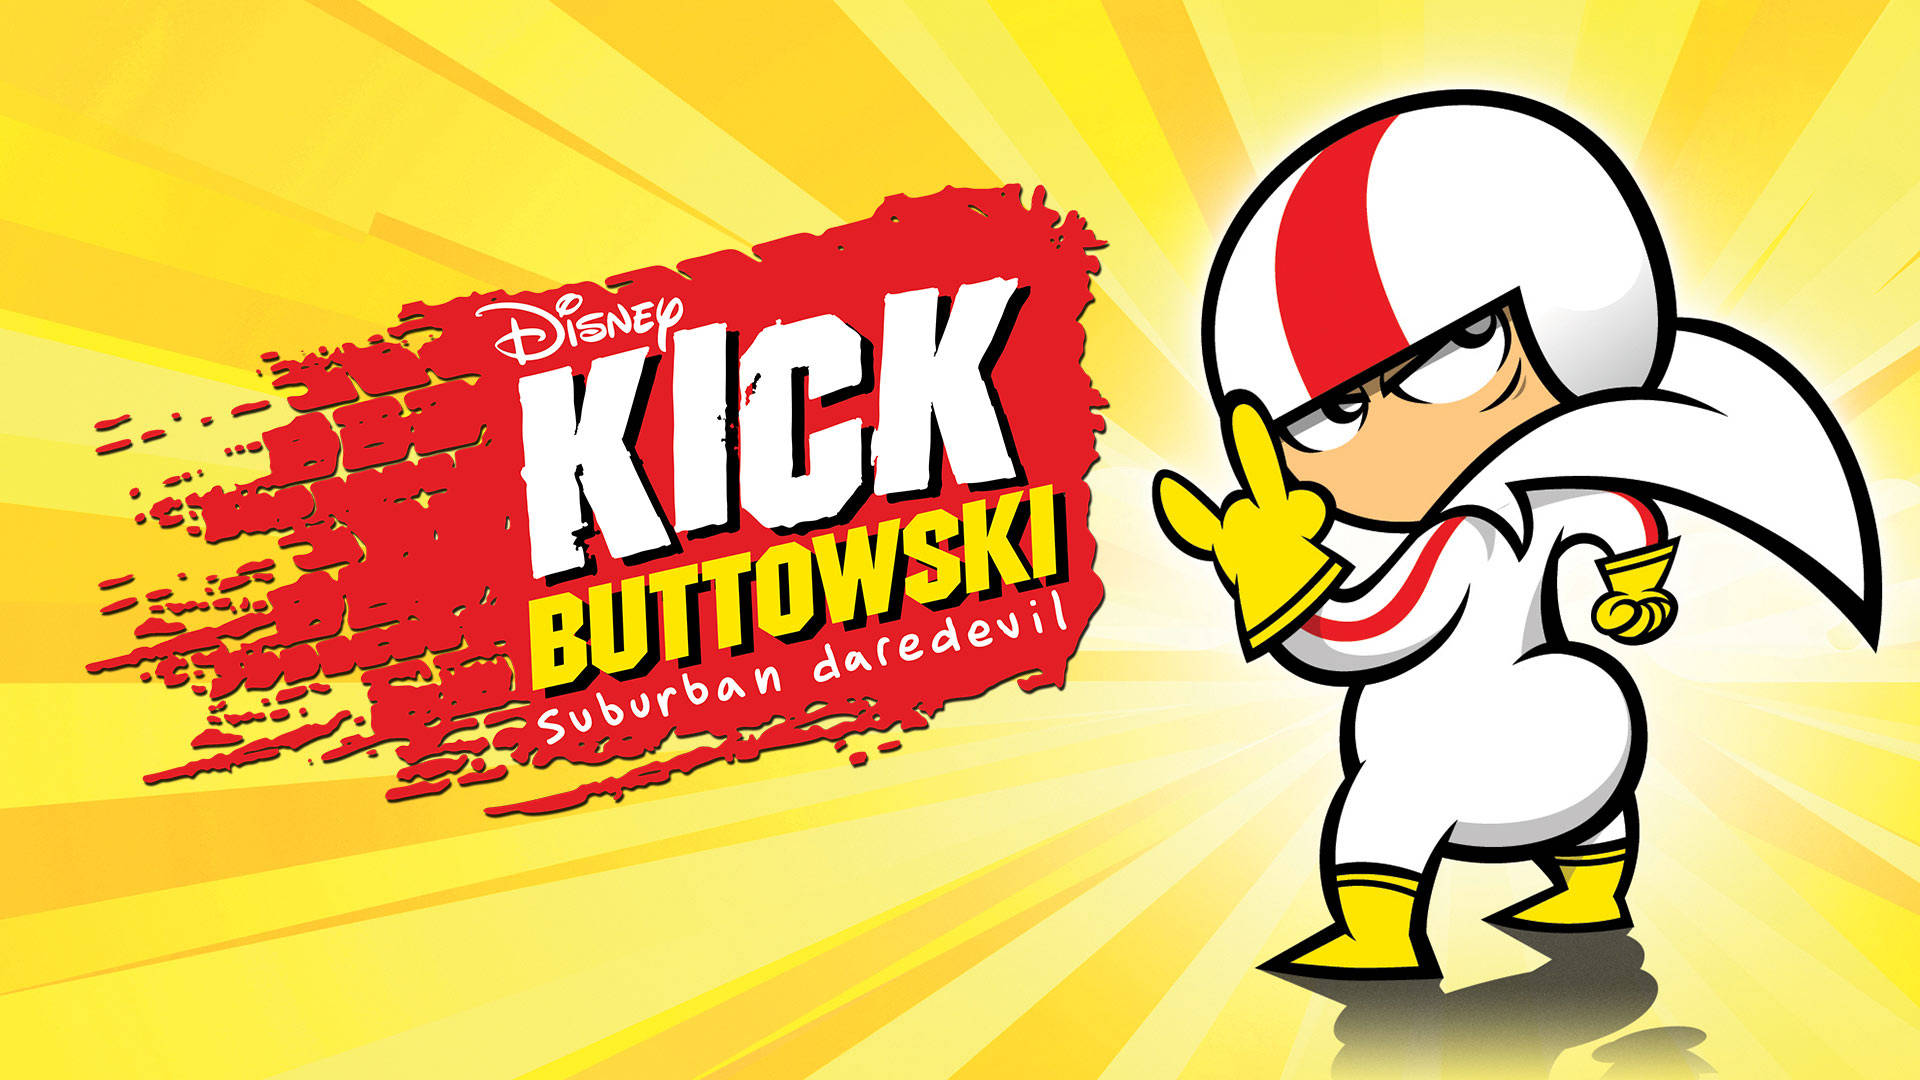 Kick buttowski background